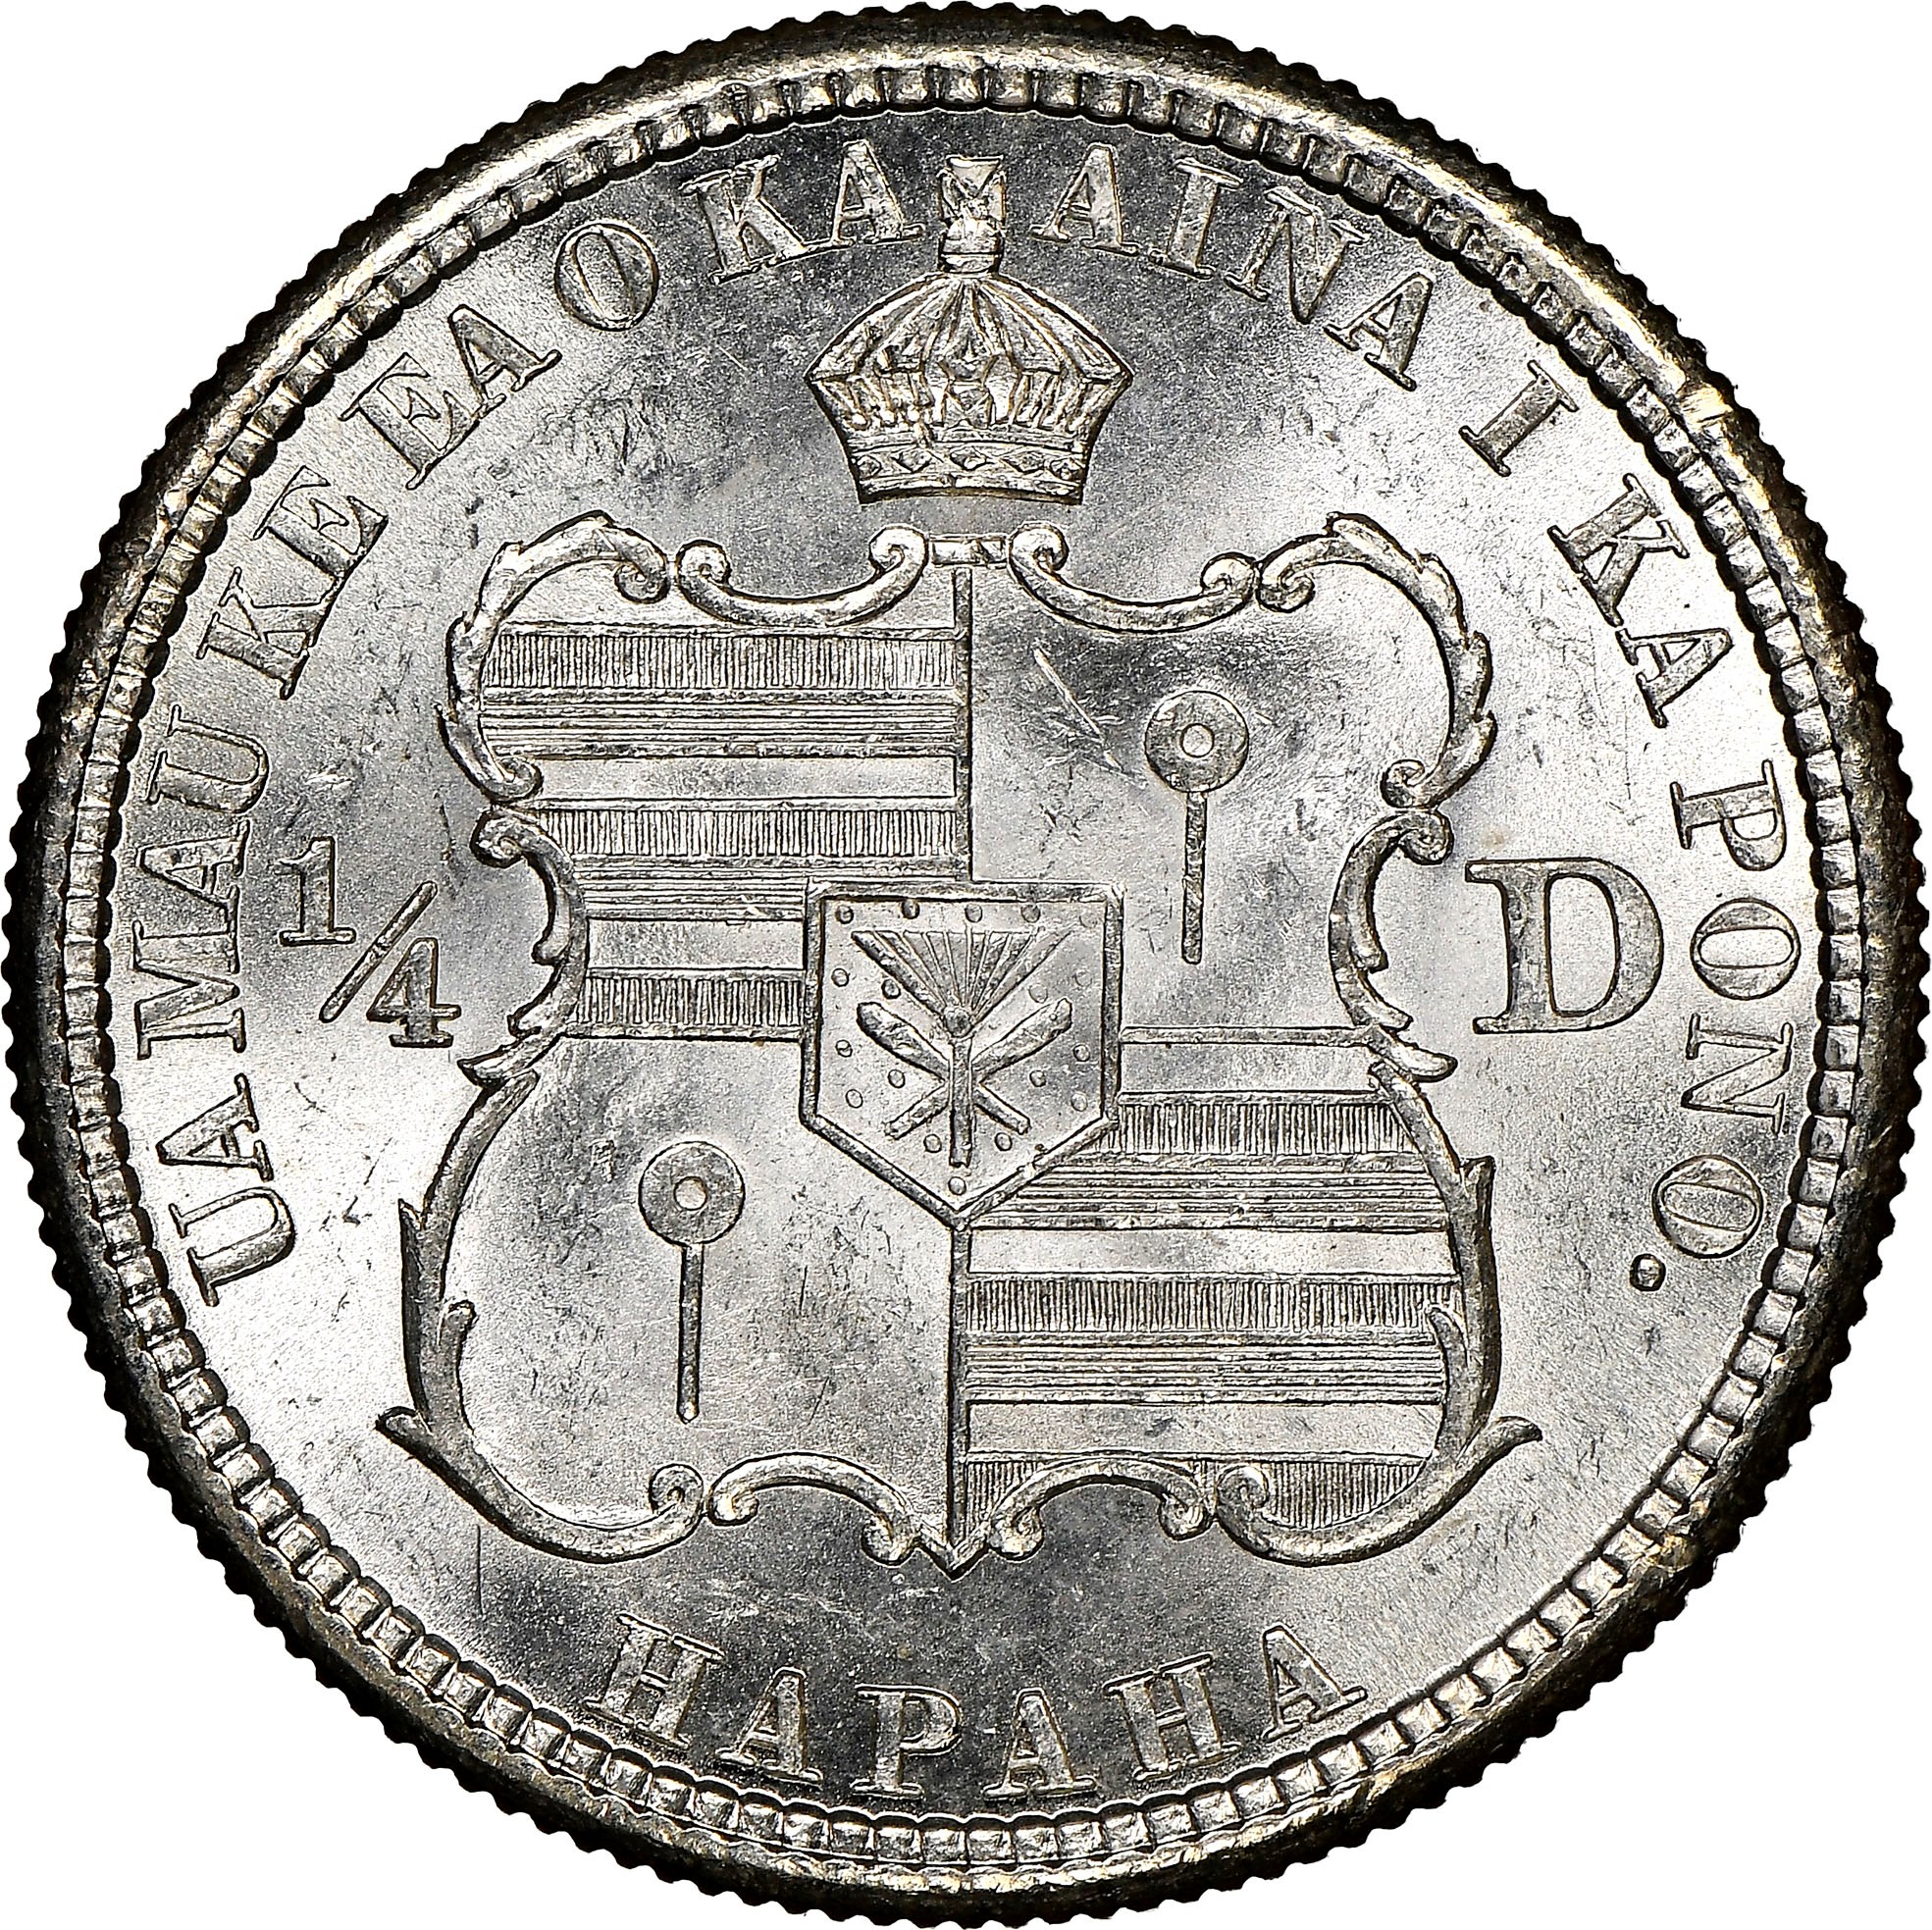 Coin Value: US Hawaii Dollar Honolulu Waikiki Diamond Head